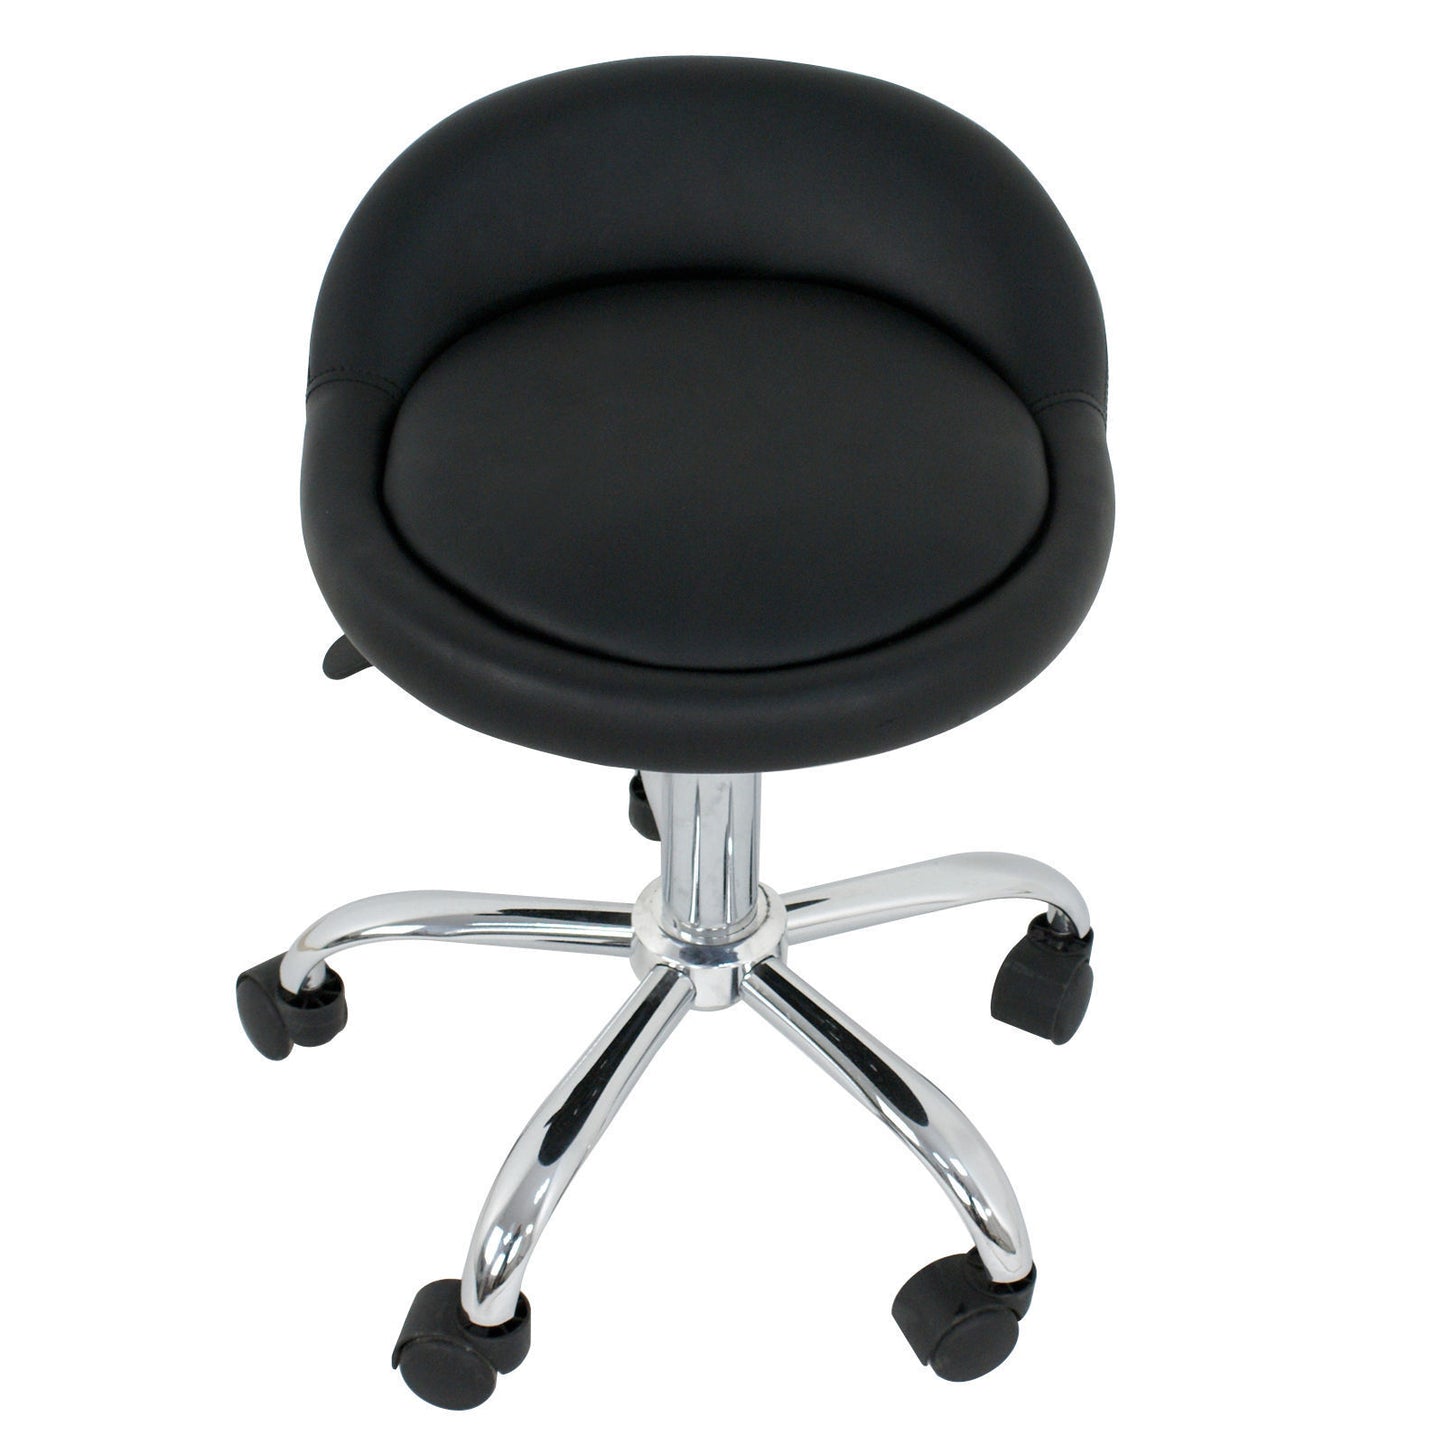 2x Hydraulic Massage / Salon Spa Stool PU Leather Seat Adjustable 18" to 24.5"